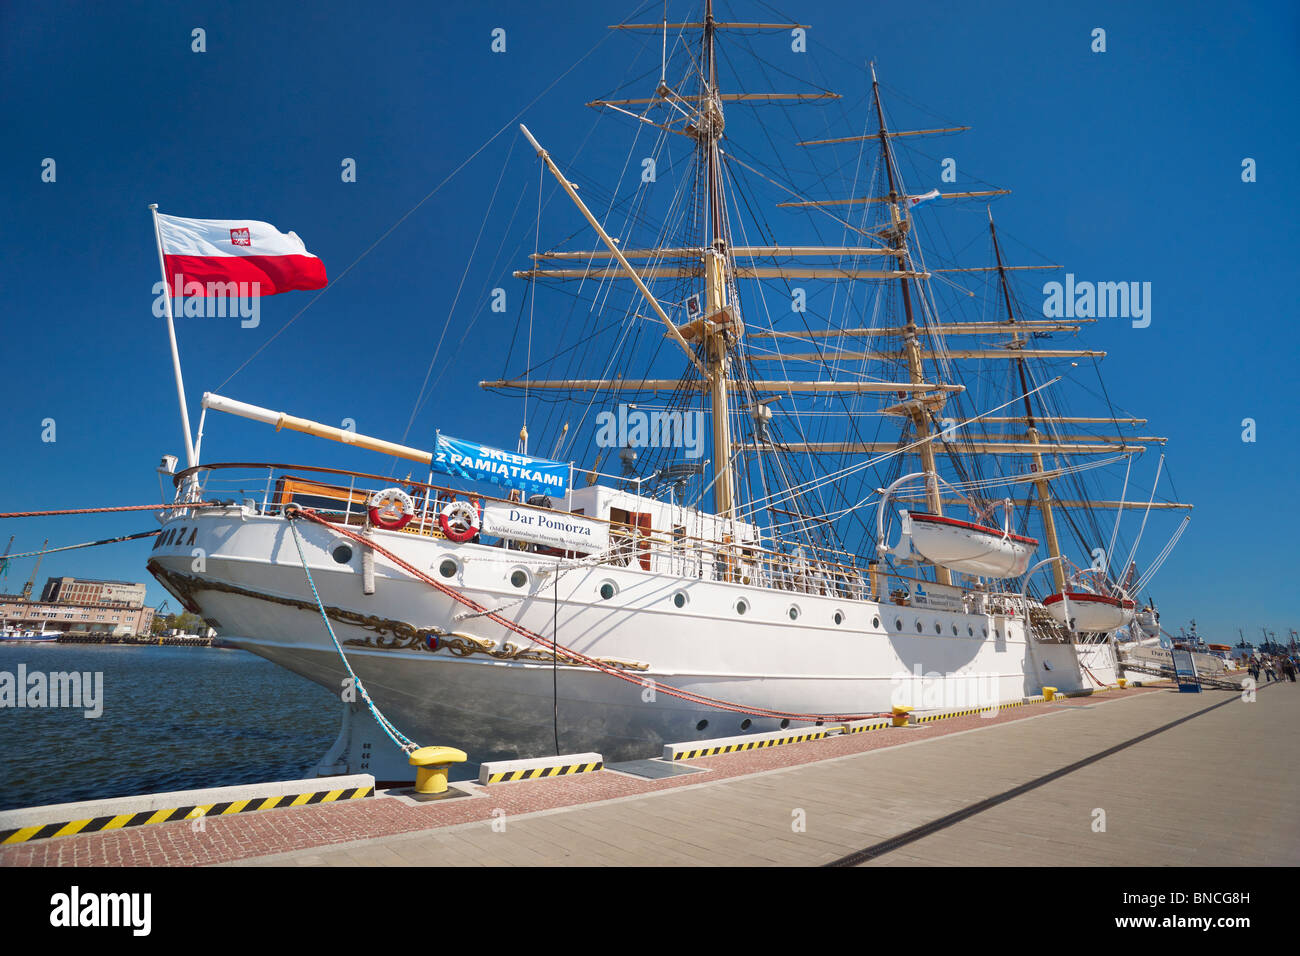 Sailing ship 'Dar Pomorza', Gdynia, Pomerania, Poland Stock Photo